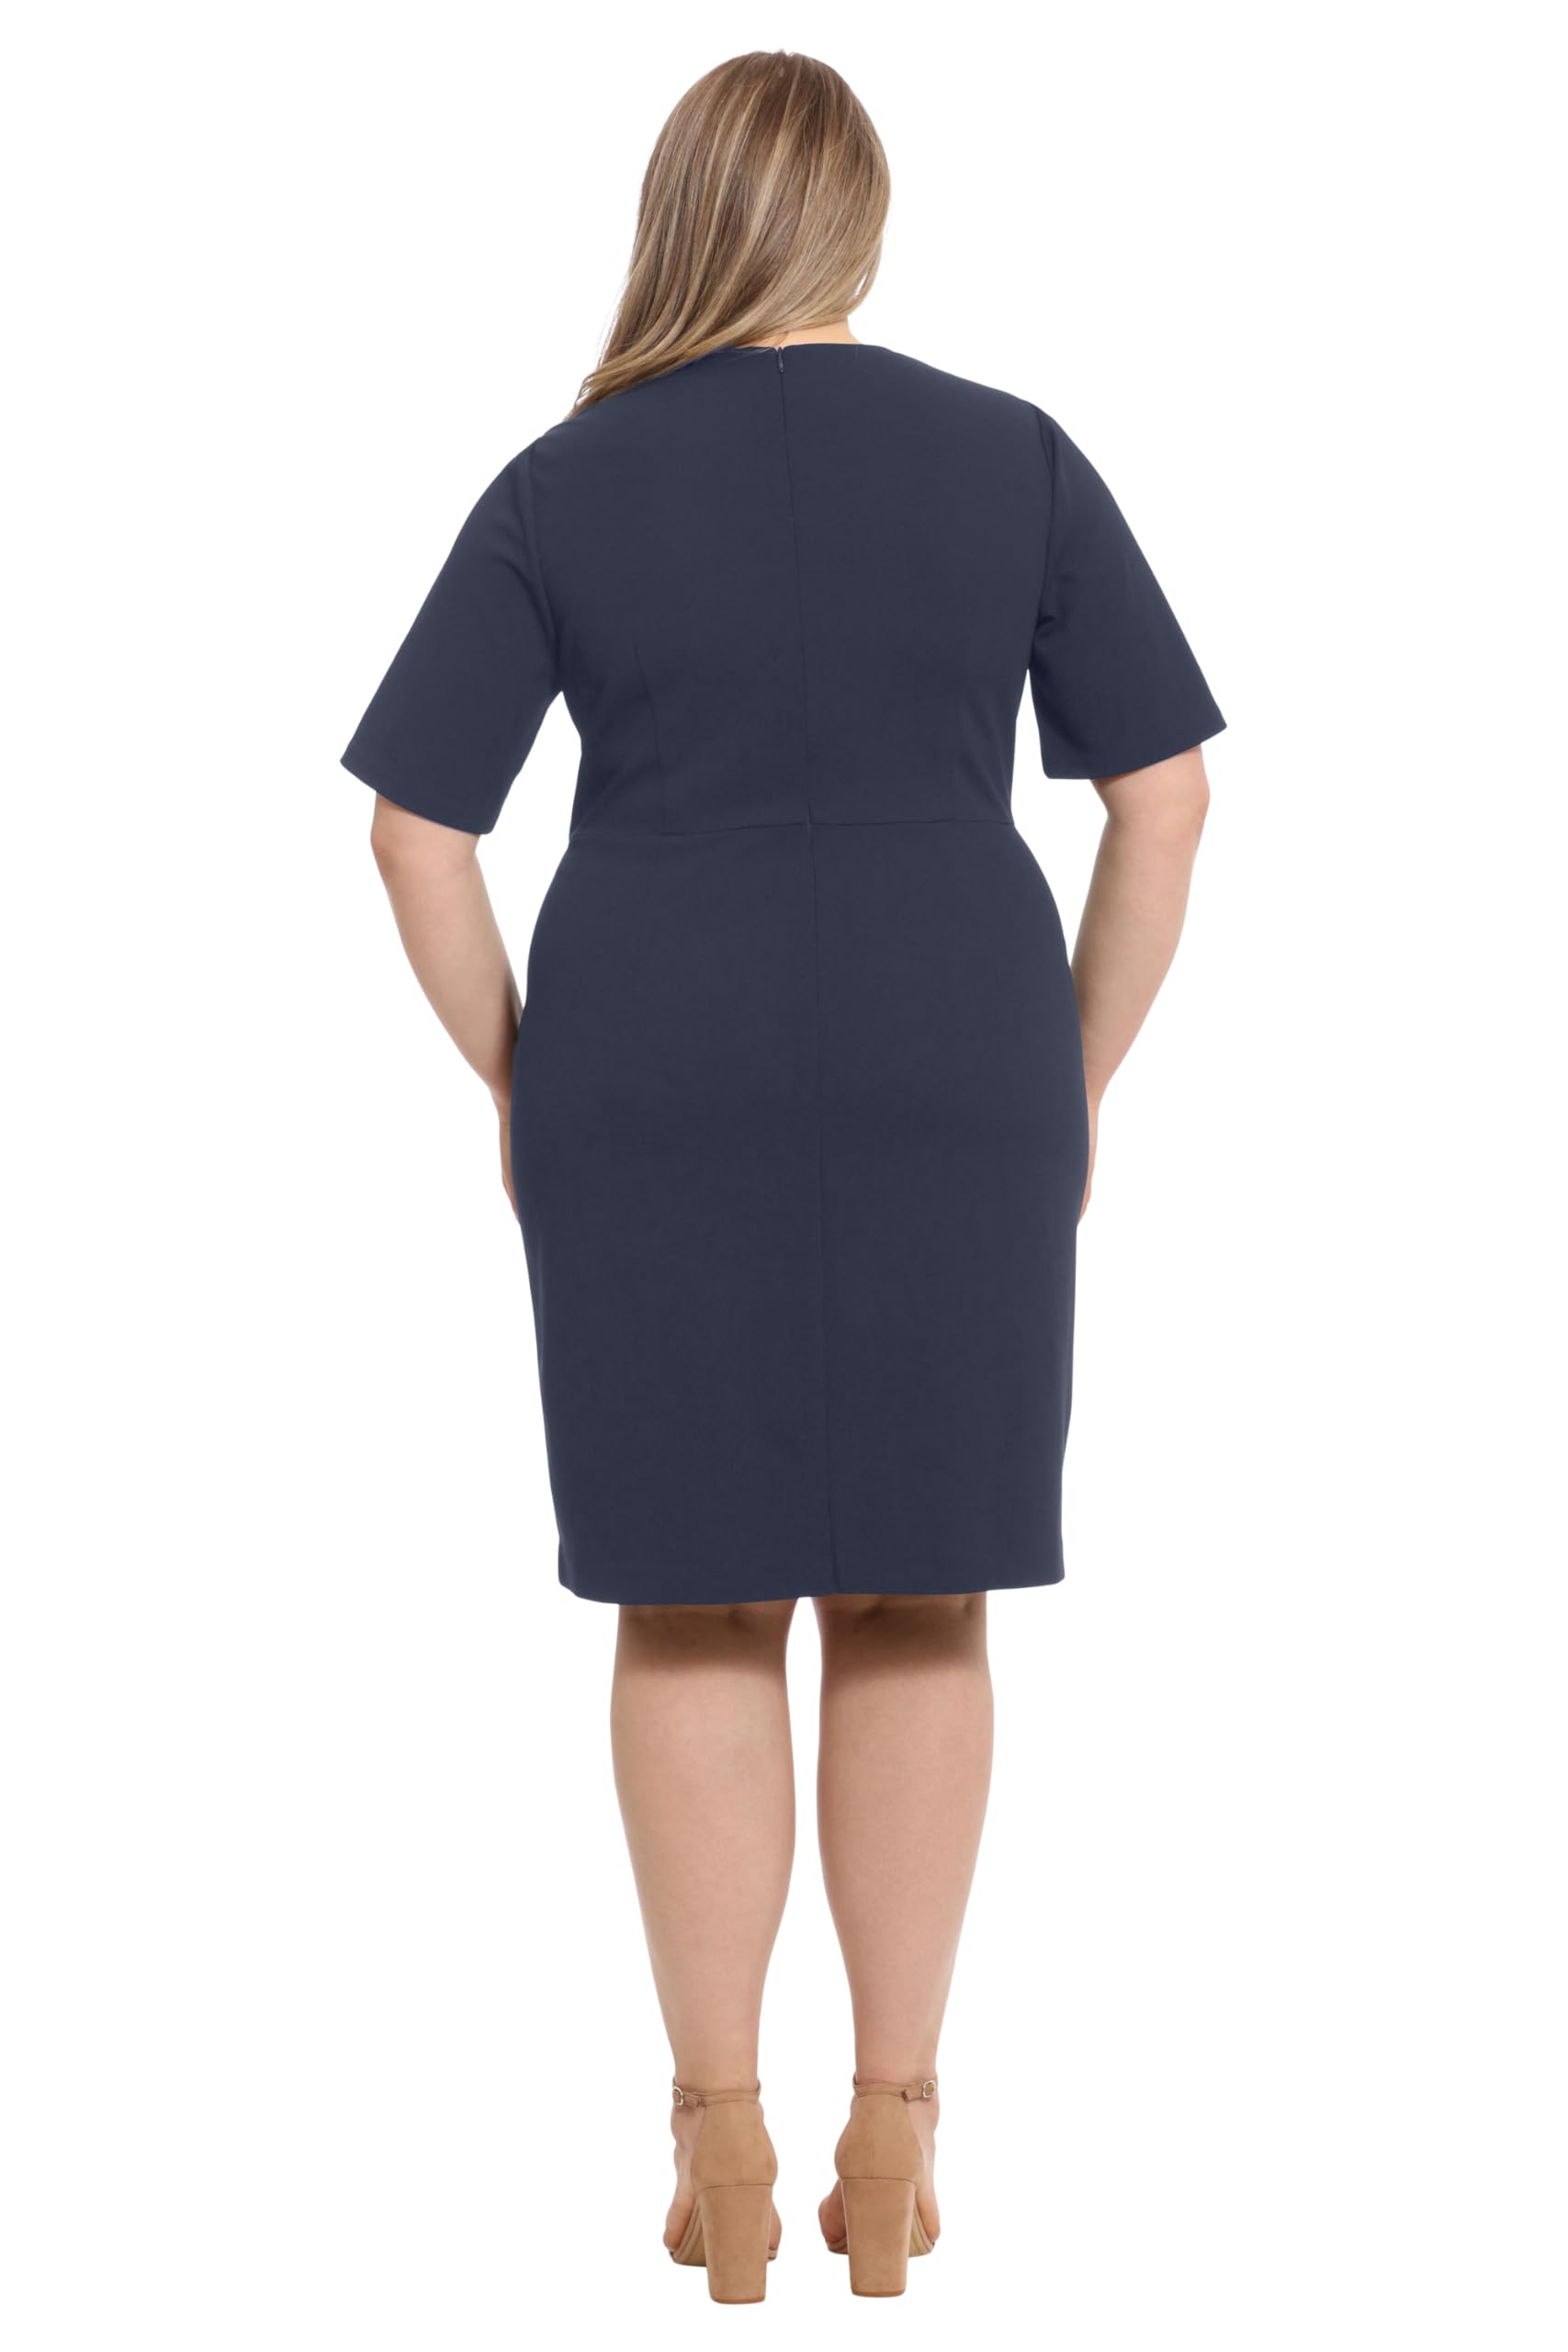 London Times Women's Short Sleeve Knee Length Crew Neck Button Side Career Polished Sheath Dress